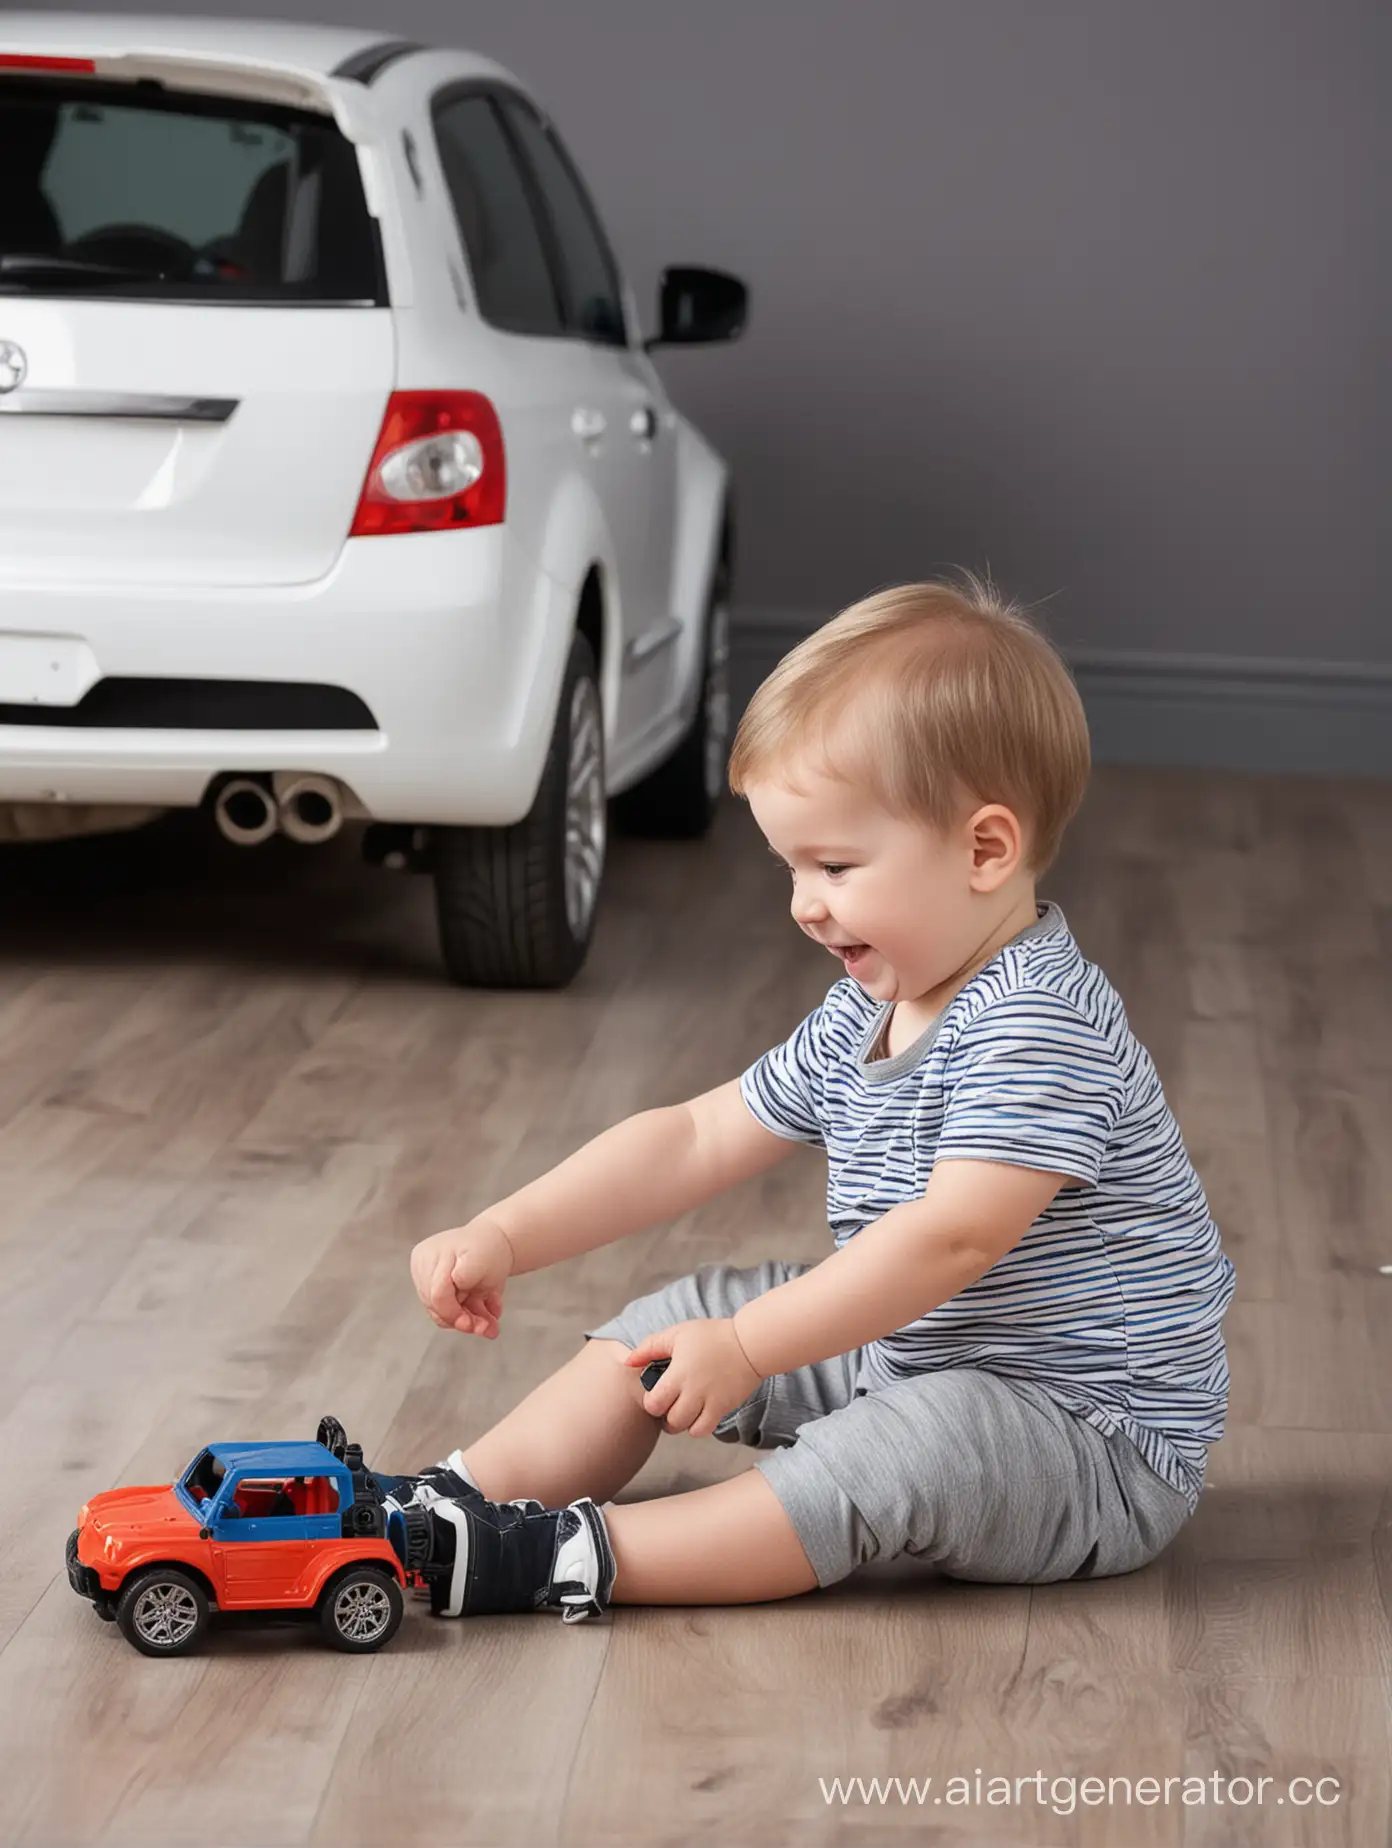 Joyful-Child-Playing-with-Toy-Cars